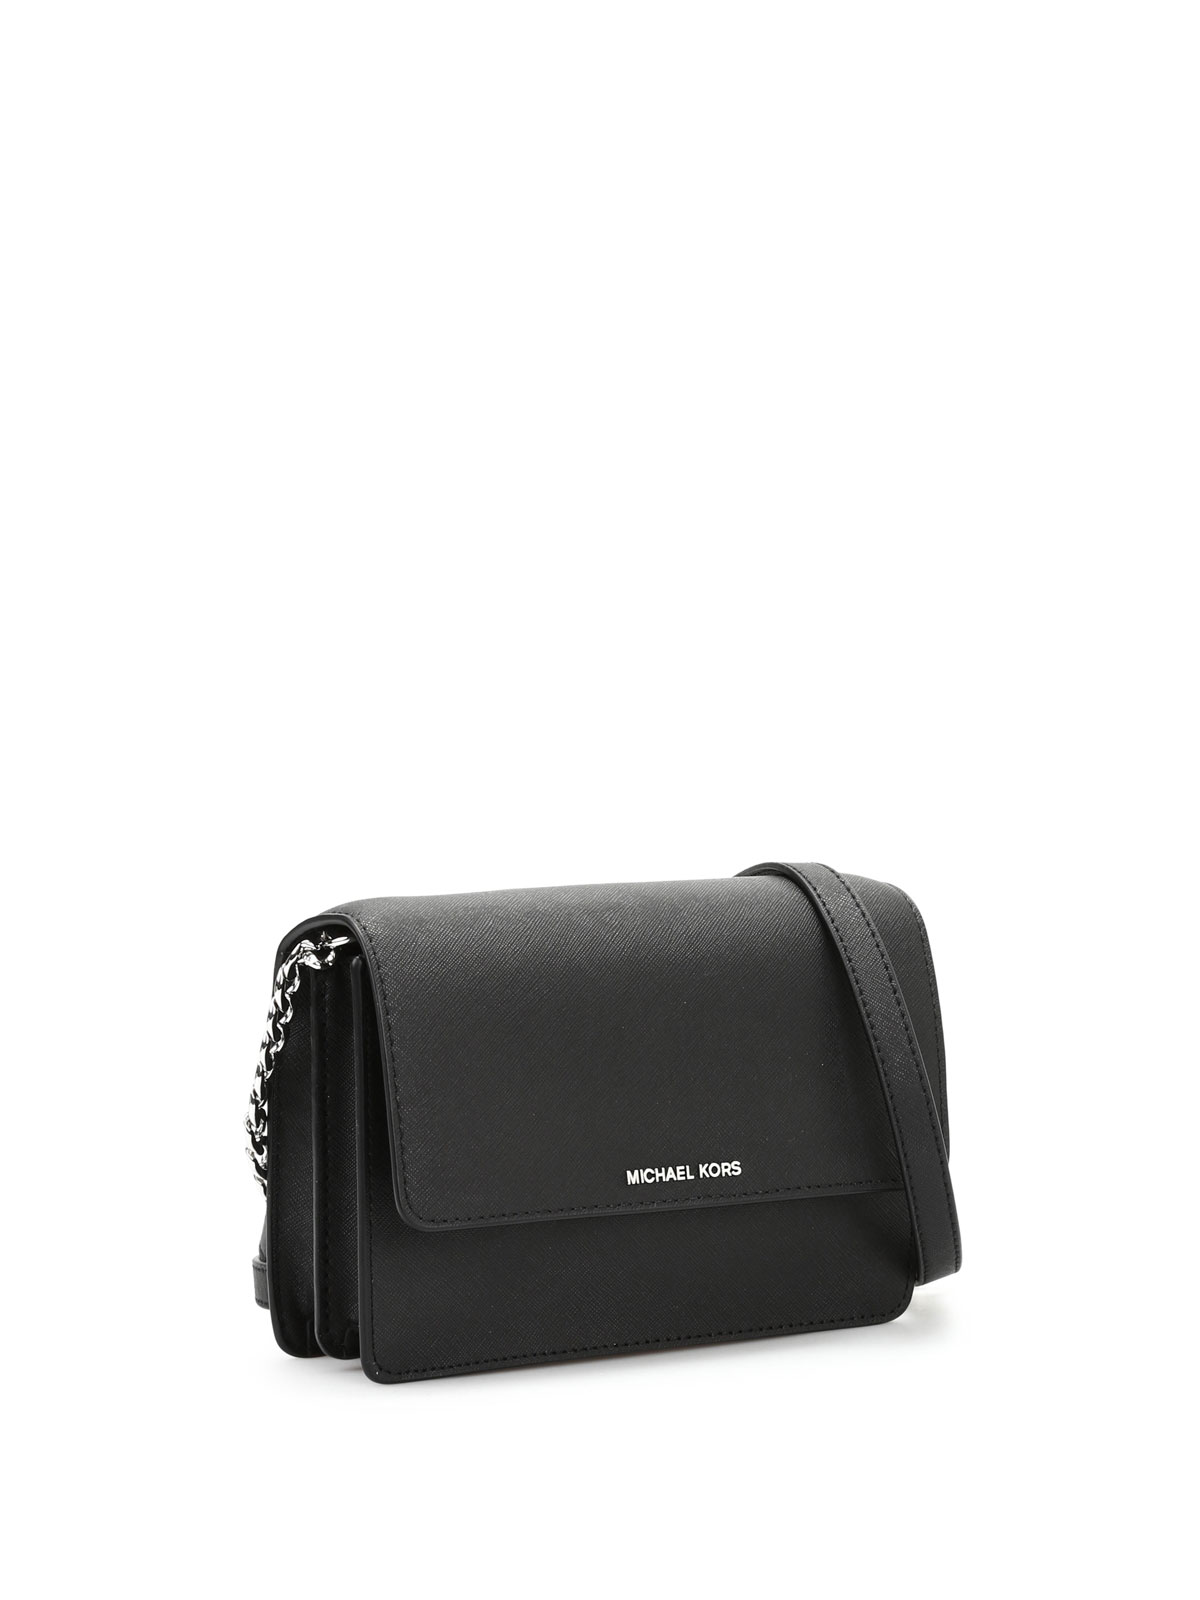 Michael Kors Daniela Small Leather Crossbody Bag